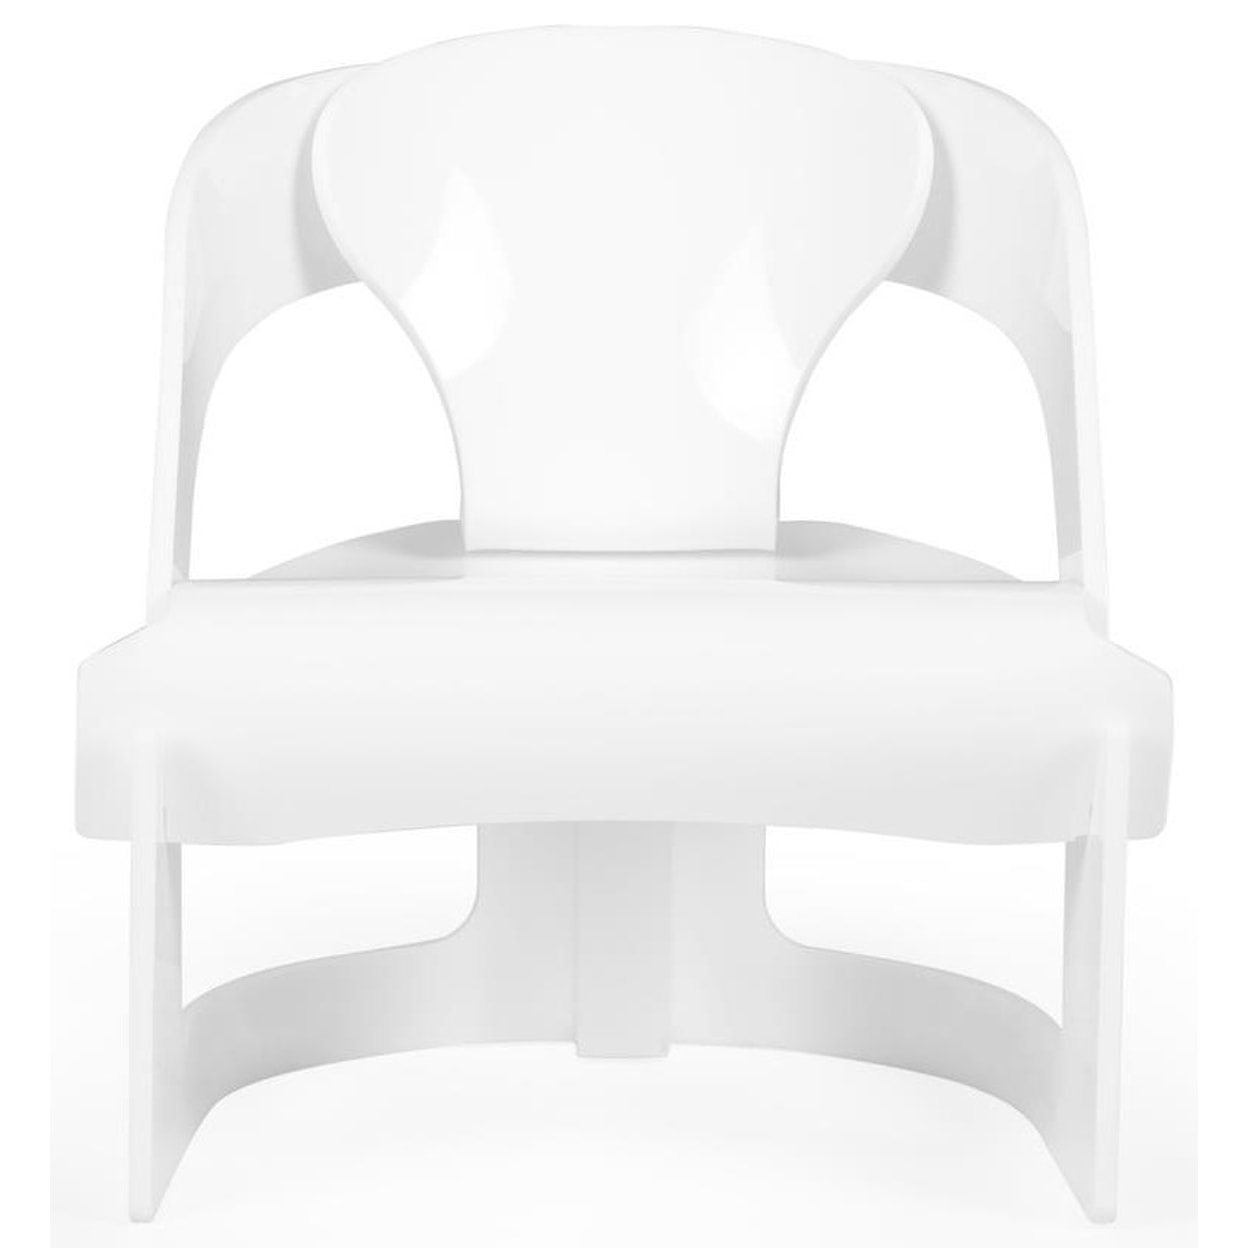 Wildwood Lamps Chairs Beverly Grove Acrylic Chair